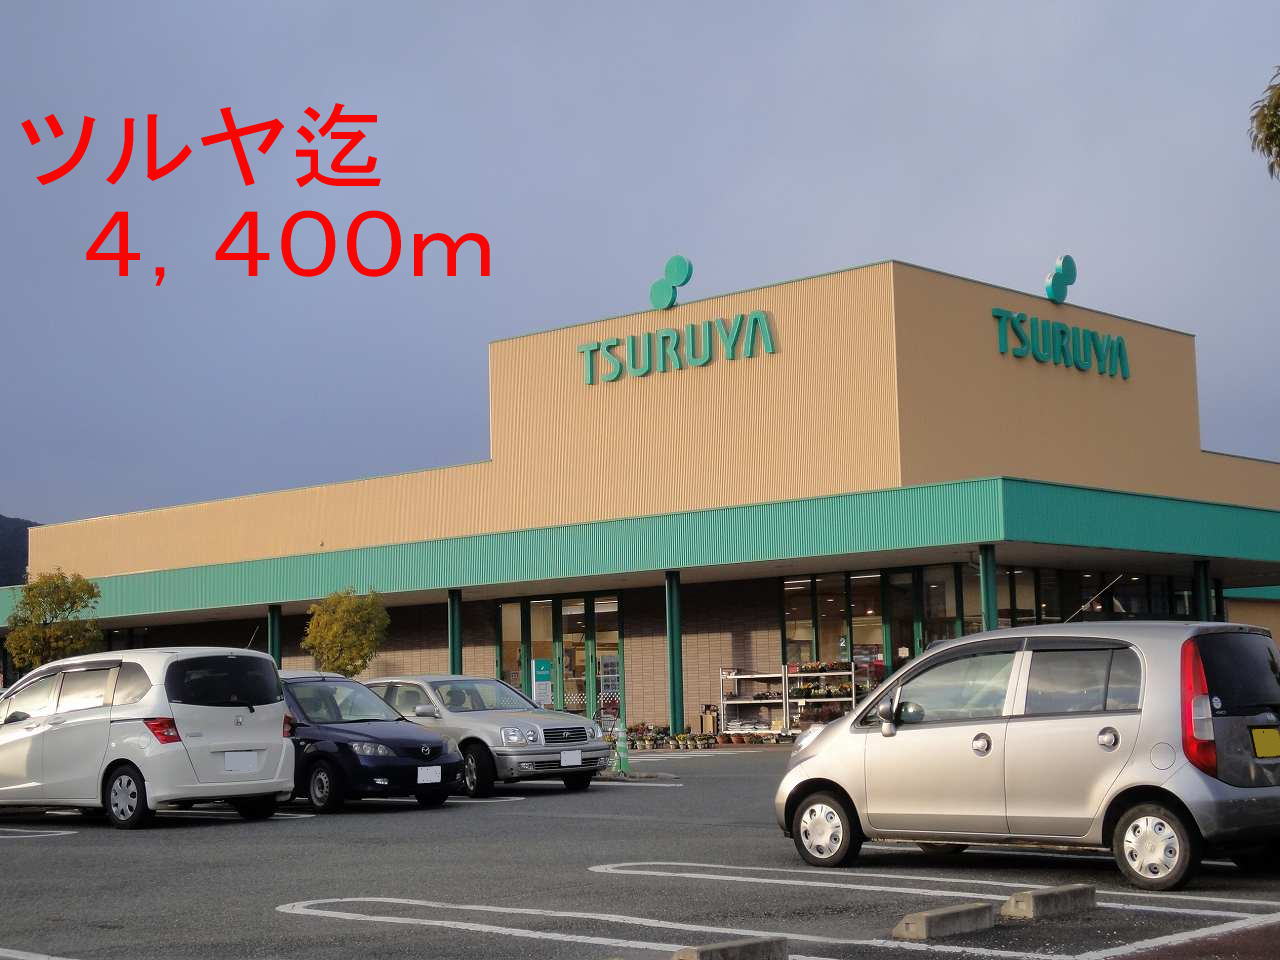 Supermarket. Tsuruya Shiota shop until the (super) 4400m